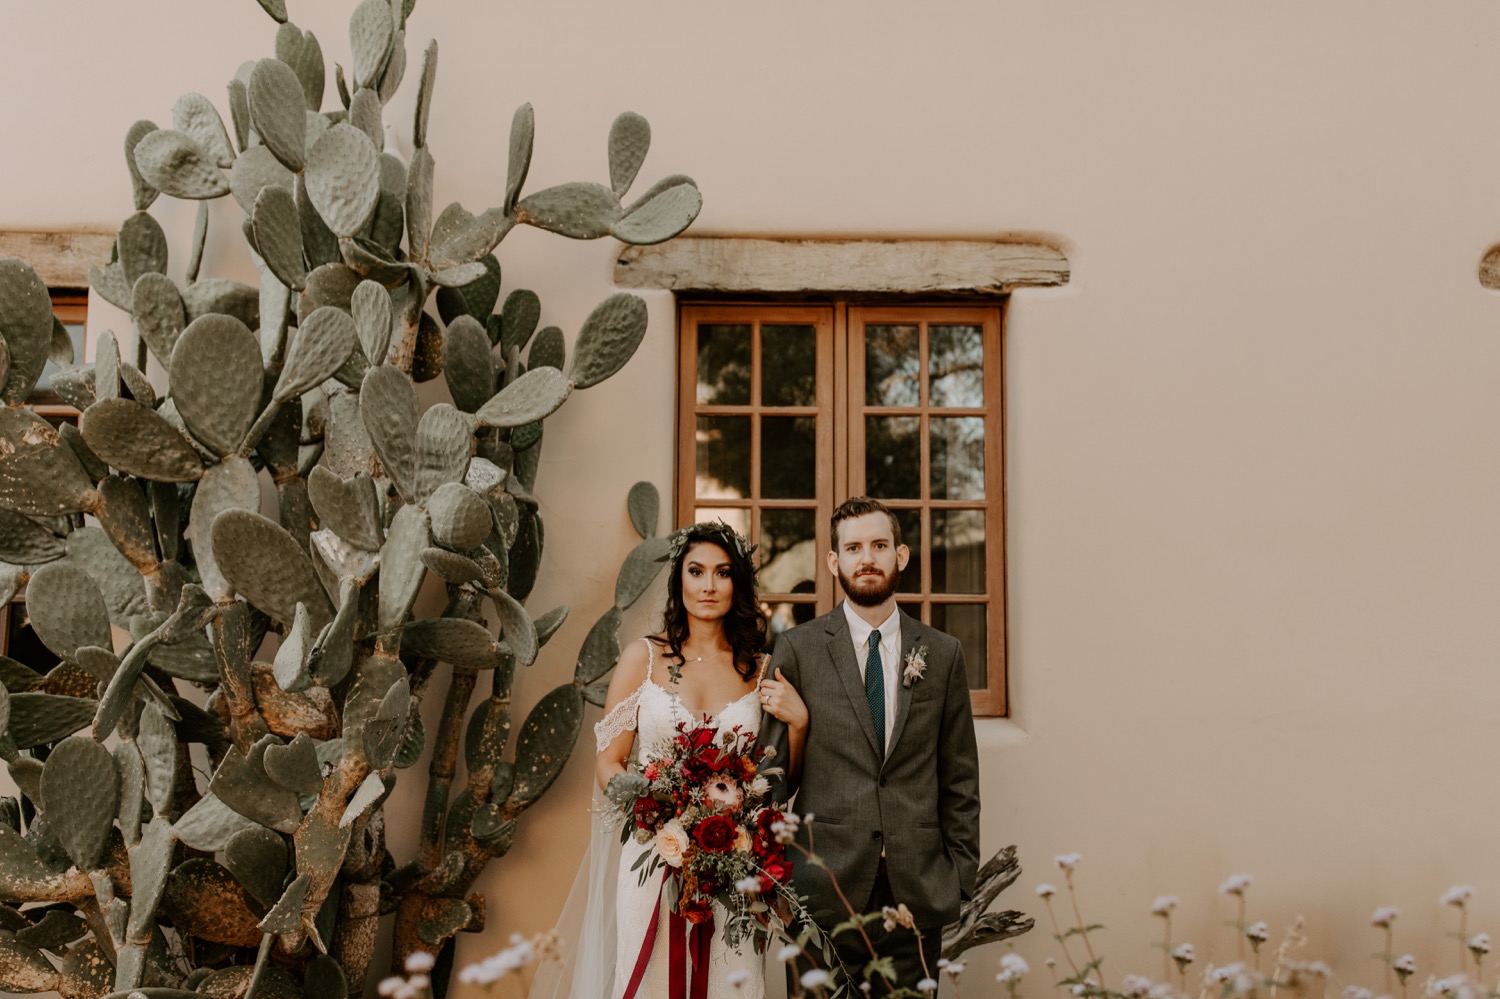 Desert themed wedding photography in Arizona